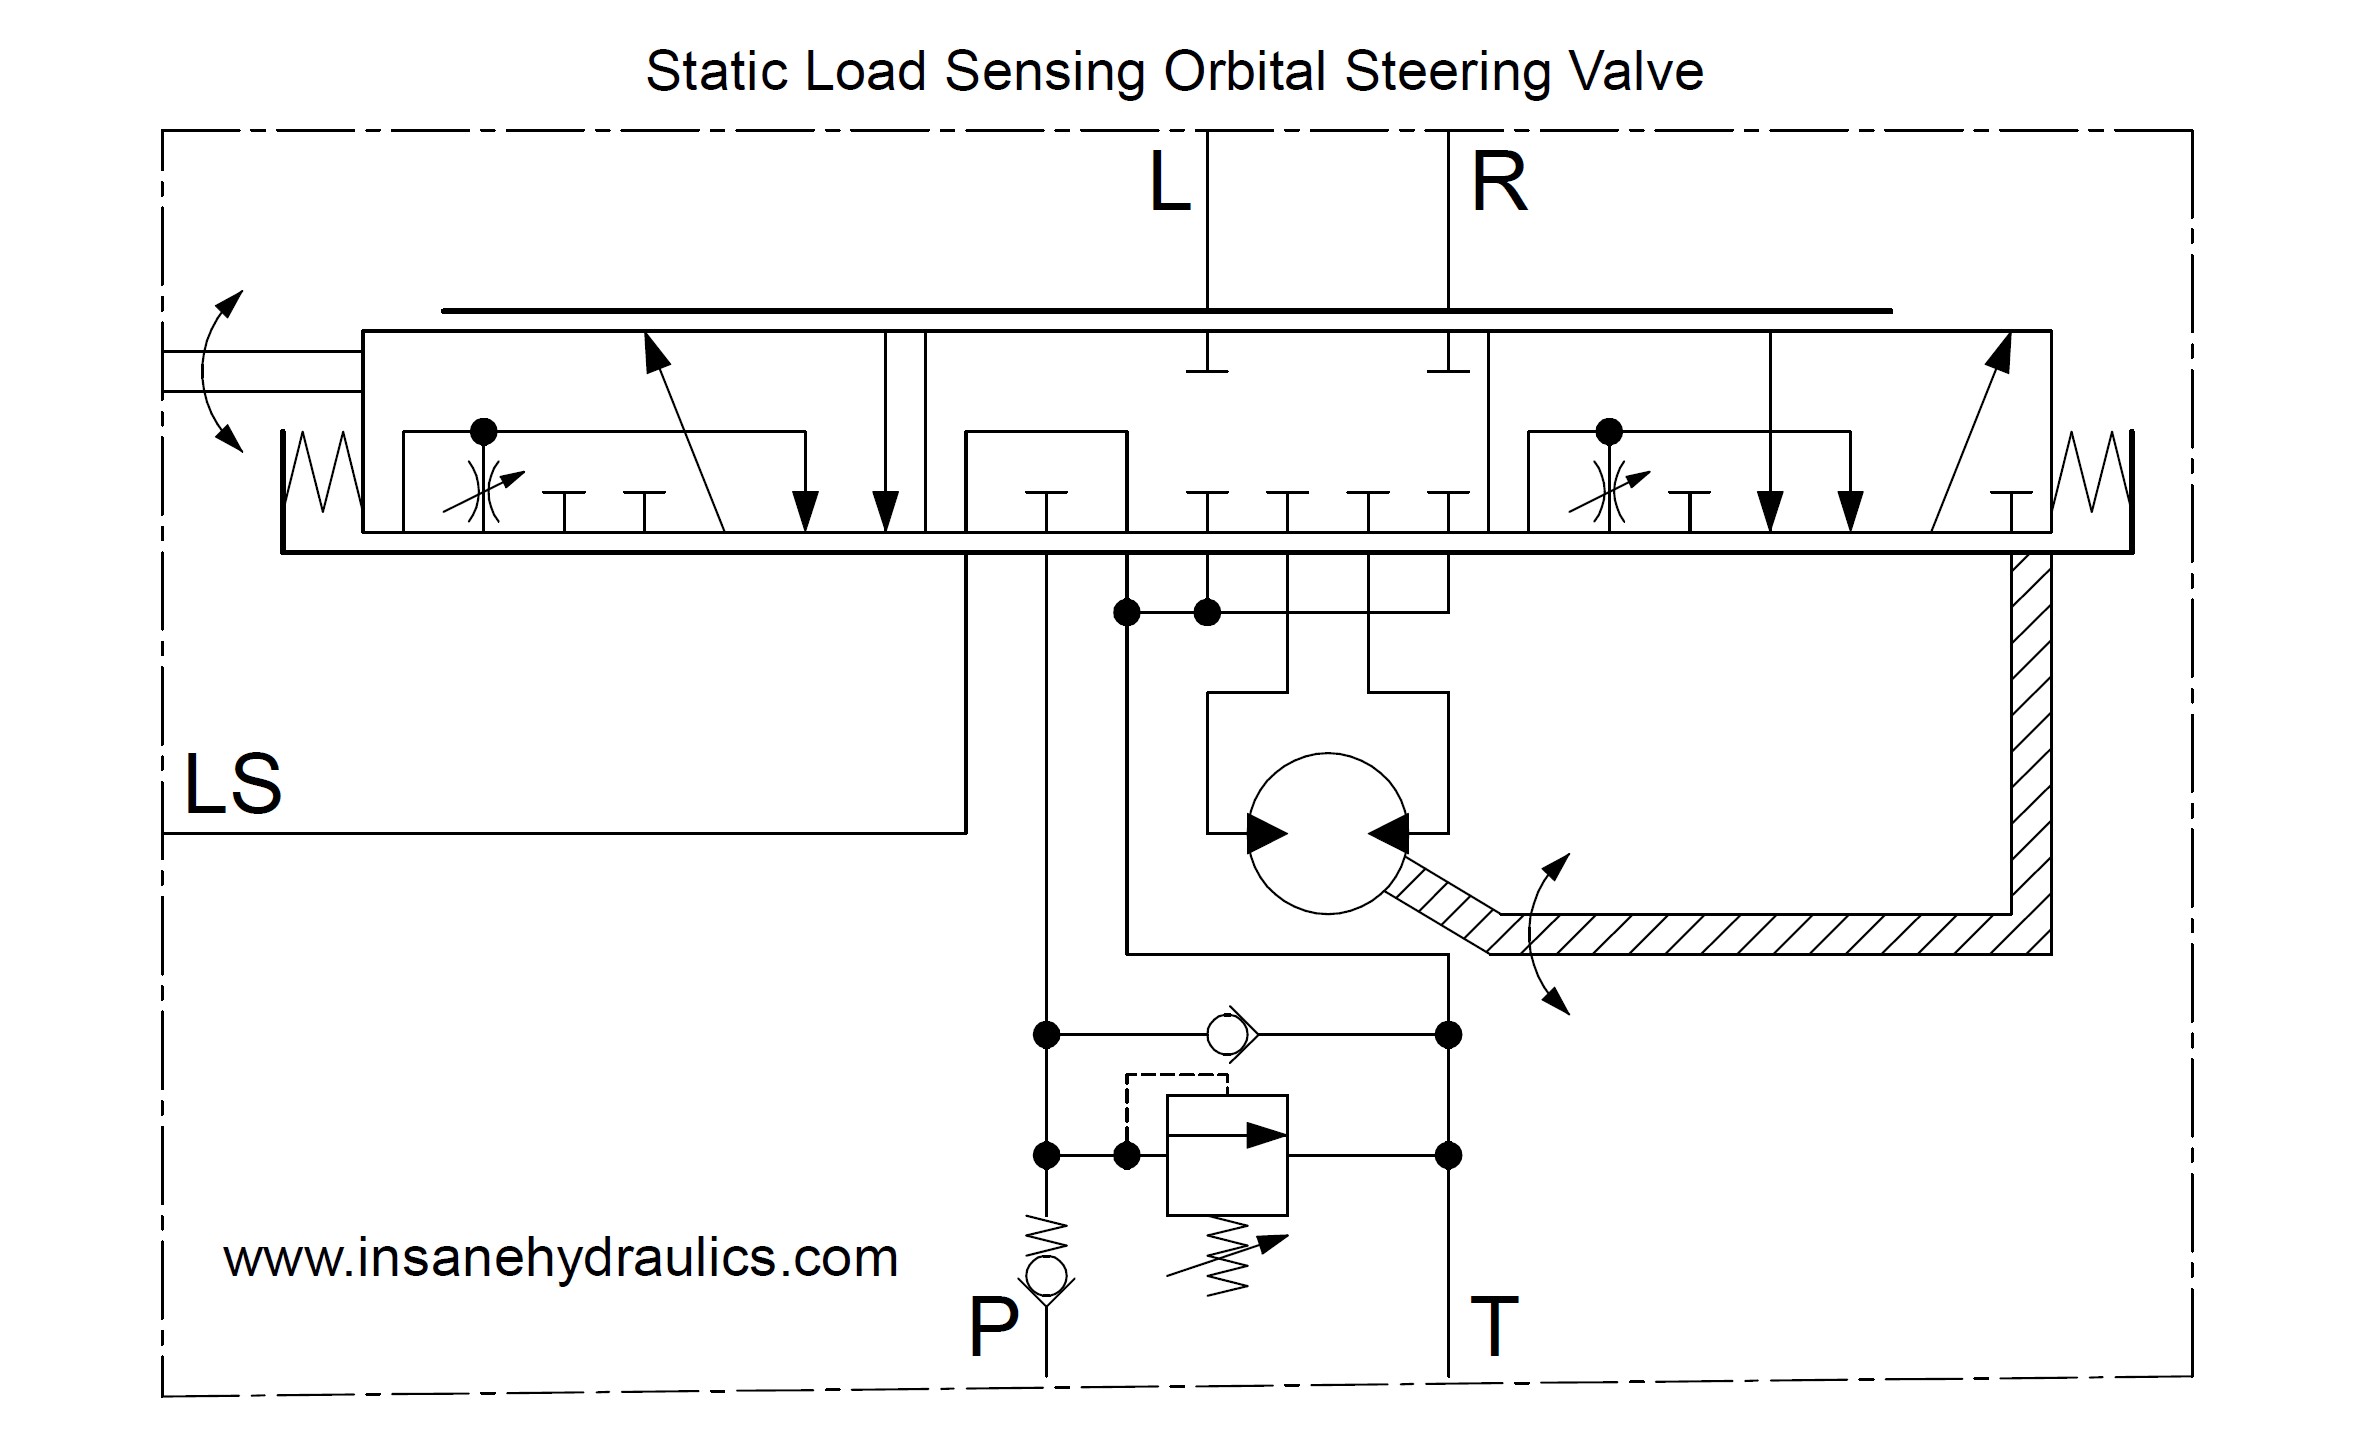 Static load sensing orbital steering valve hydraulic diagram